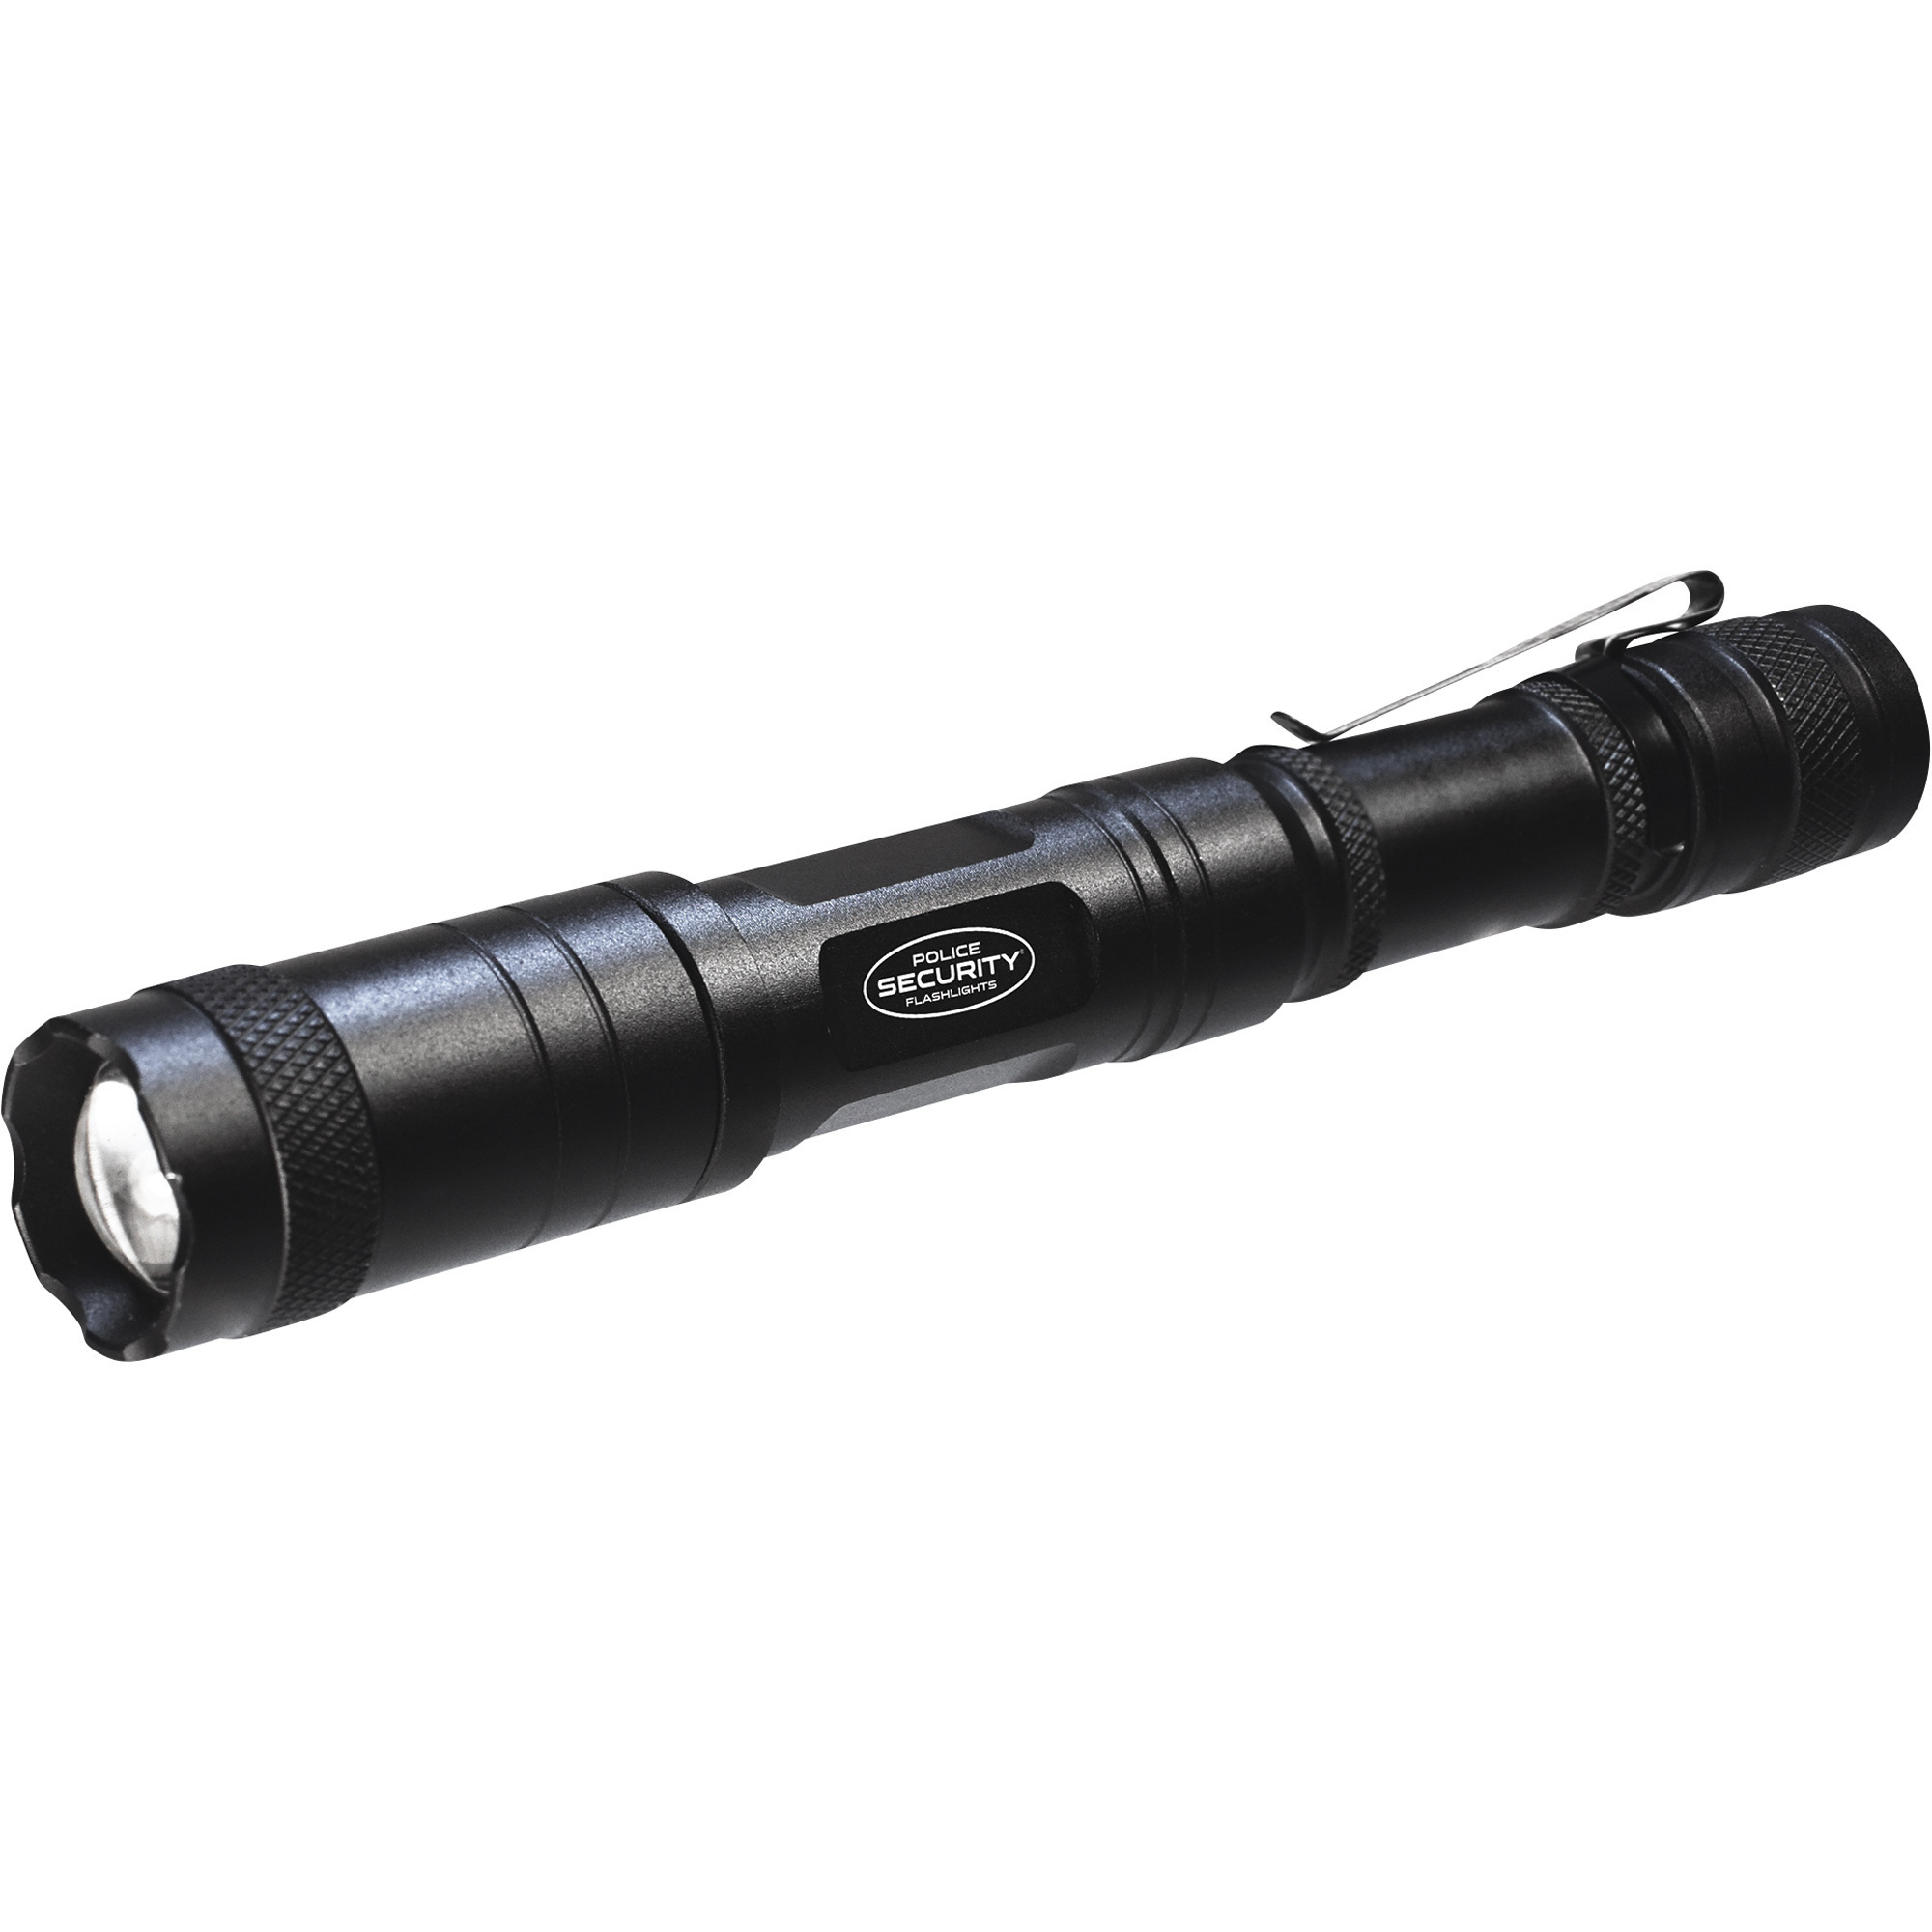 Police Security Sleuth 2.0 Flashlight, 300 Lumens, Model 38404